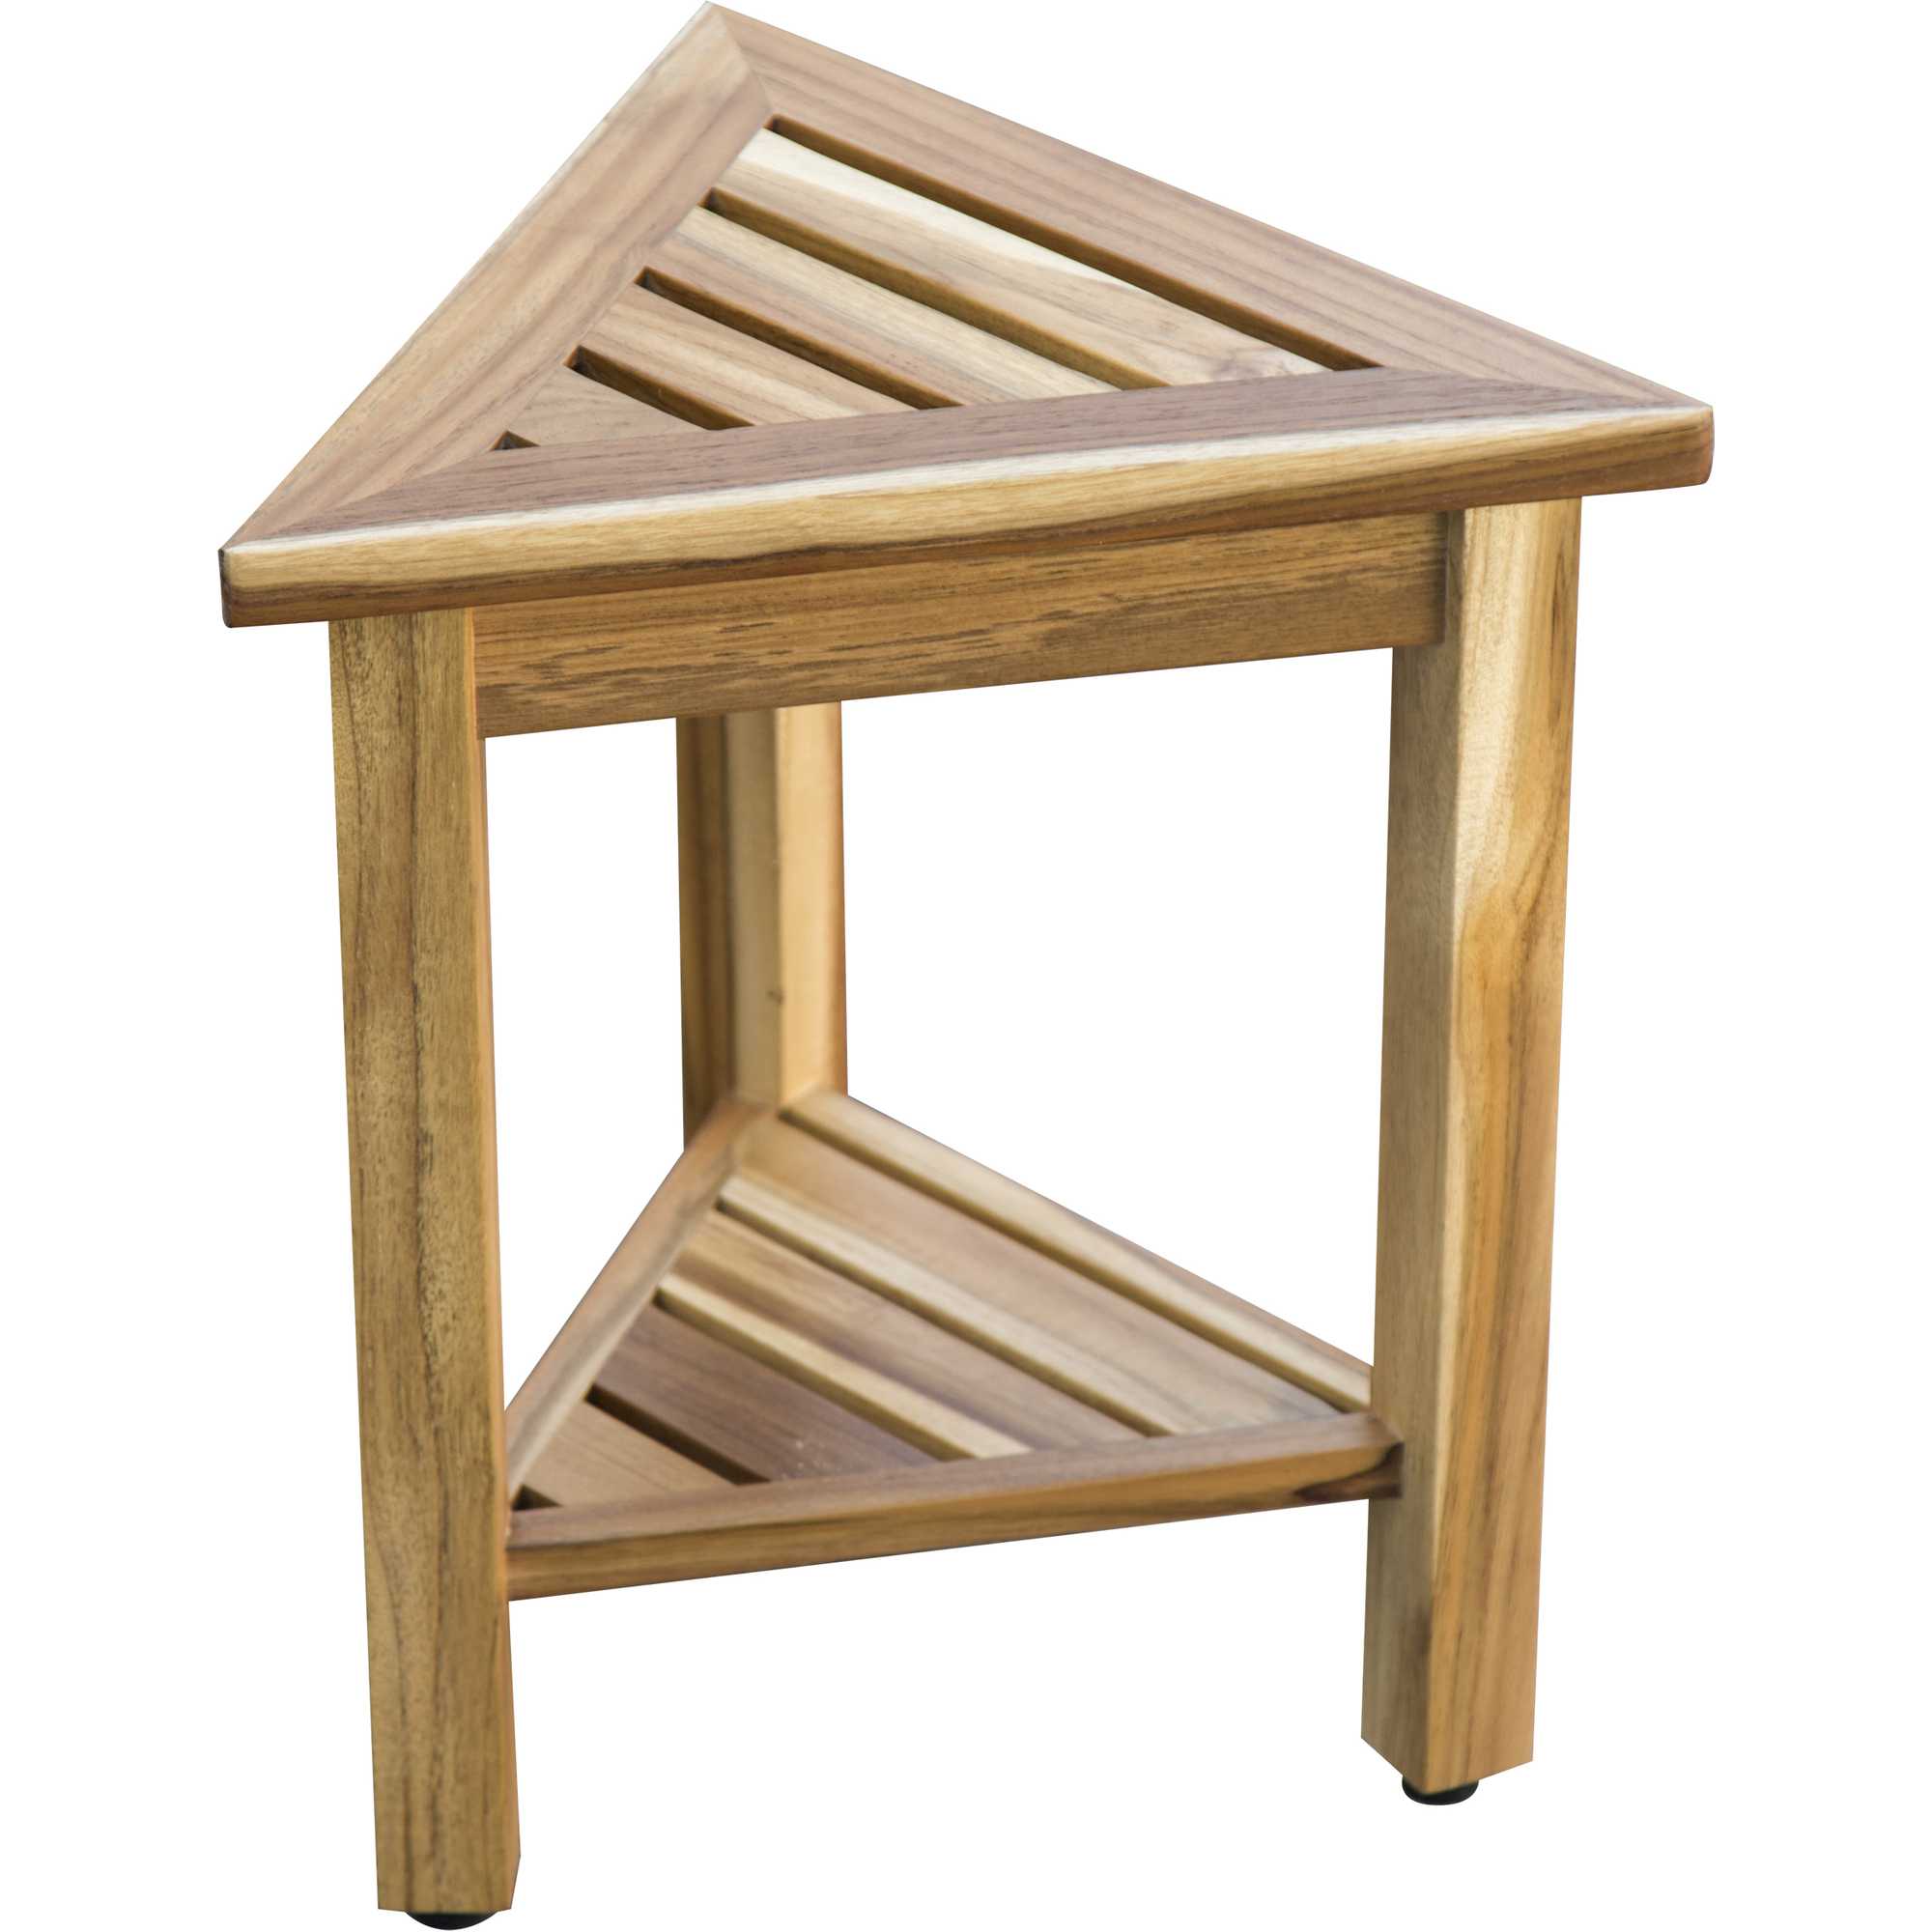 18" Teak Corner Shower Stool or Bench with Shelf in Natural Finish